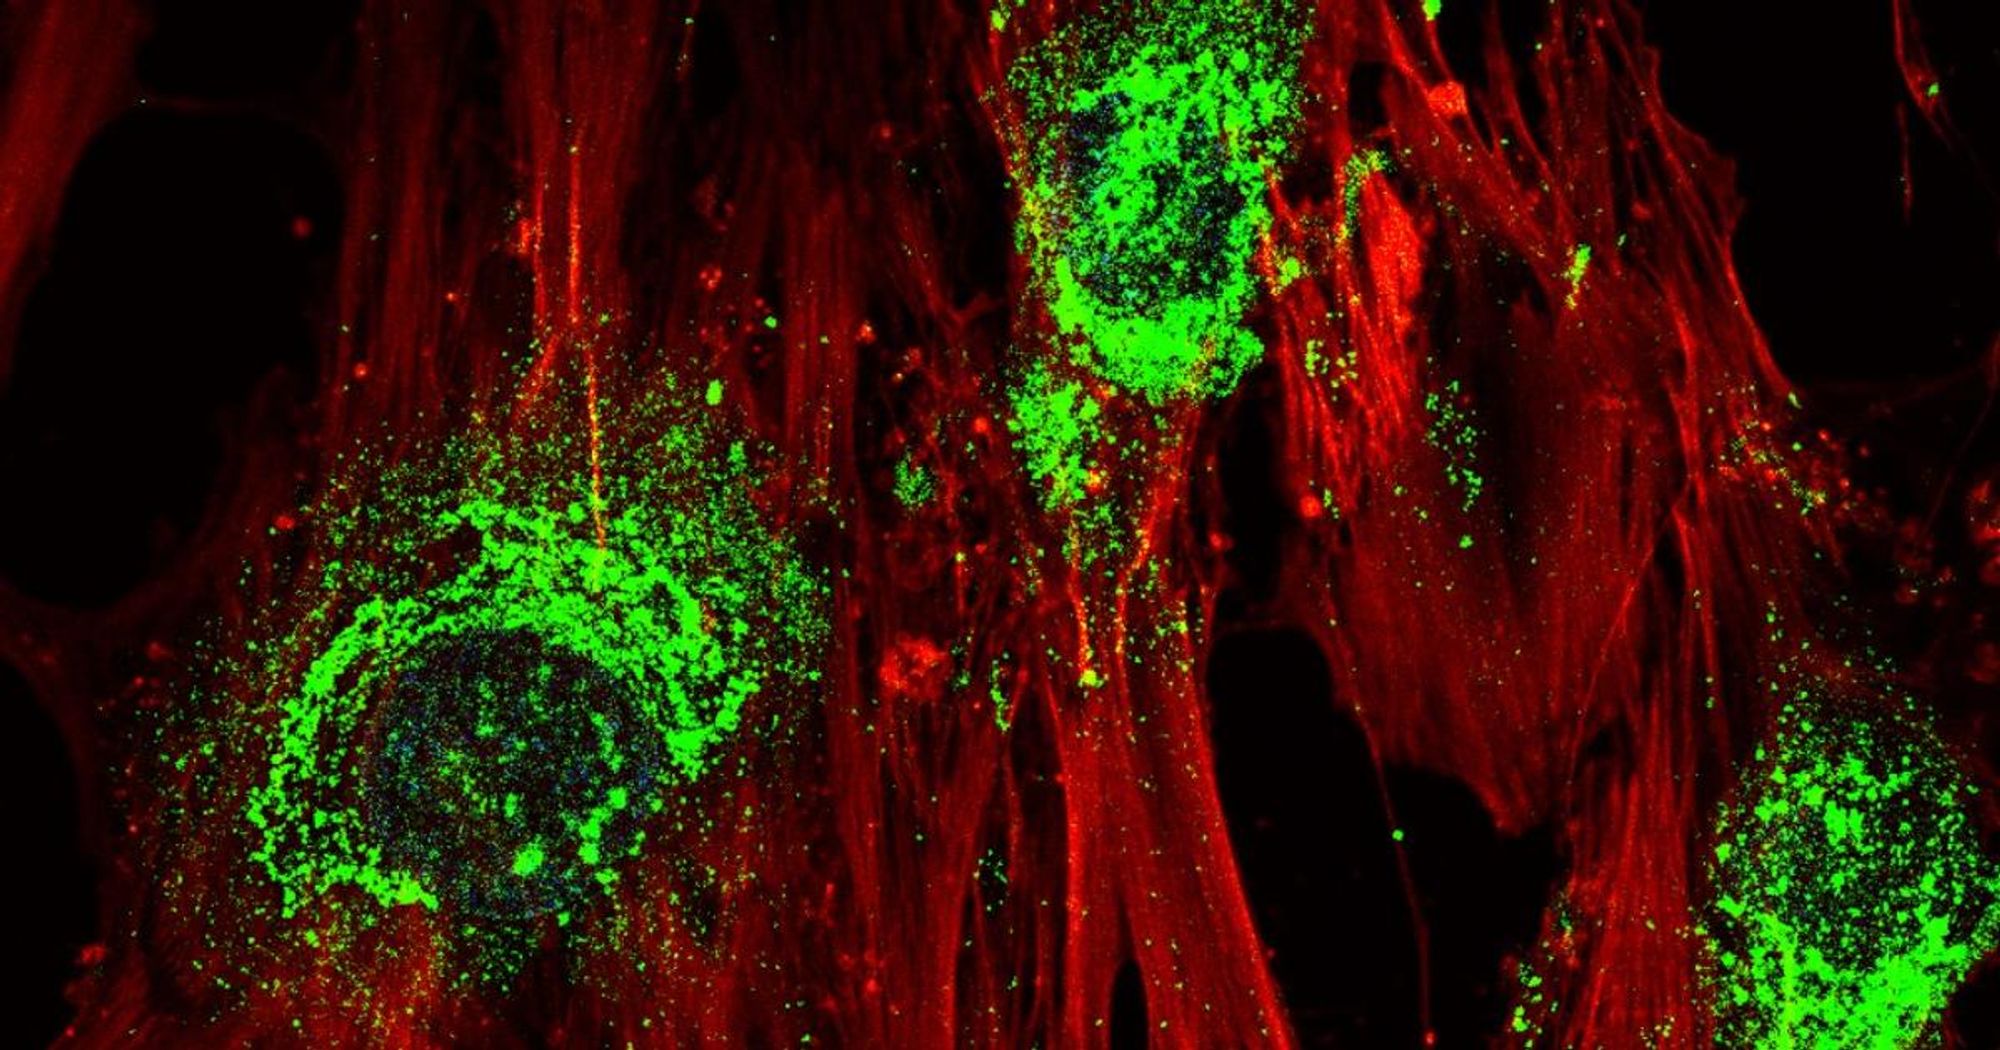 Sound waves convert stem cells into bone in regenerative breakthrough